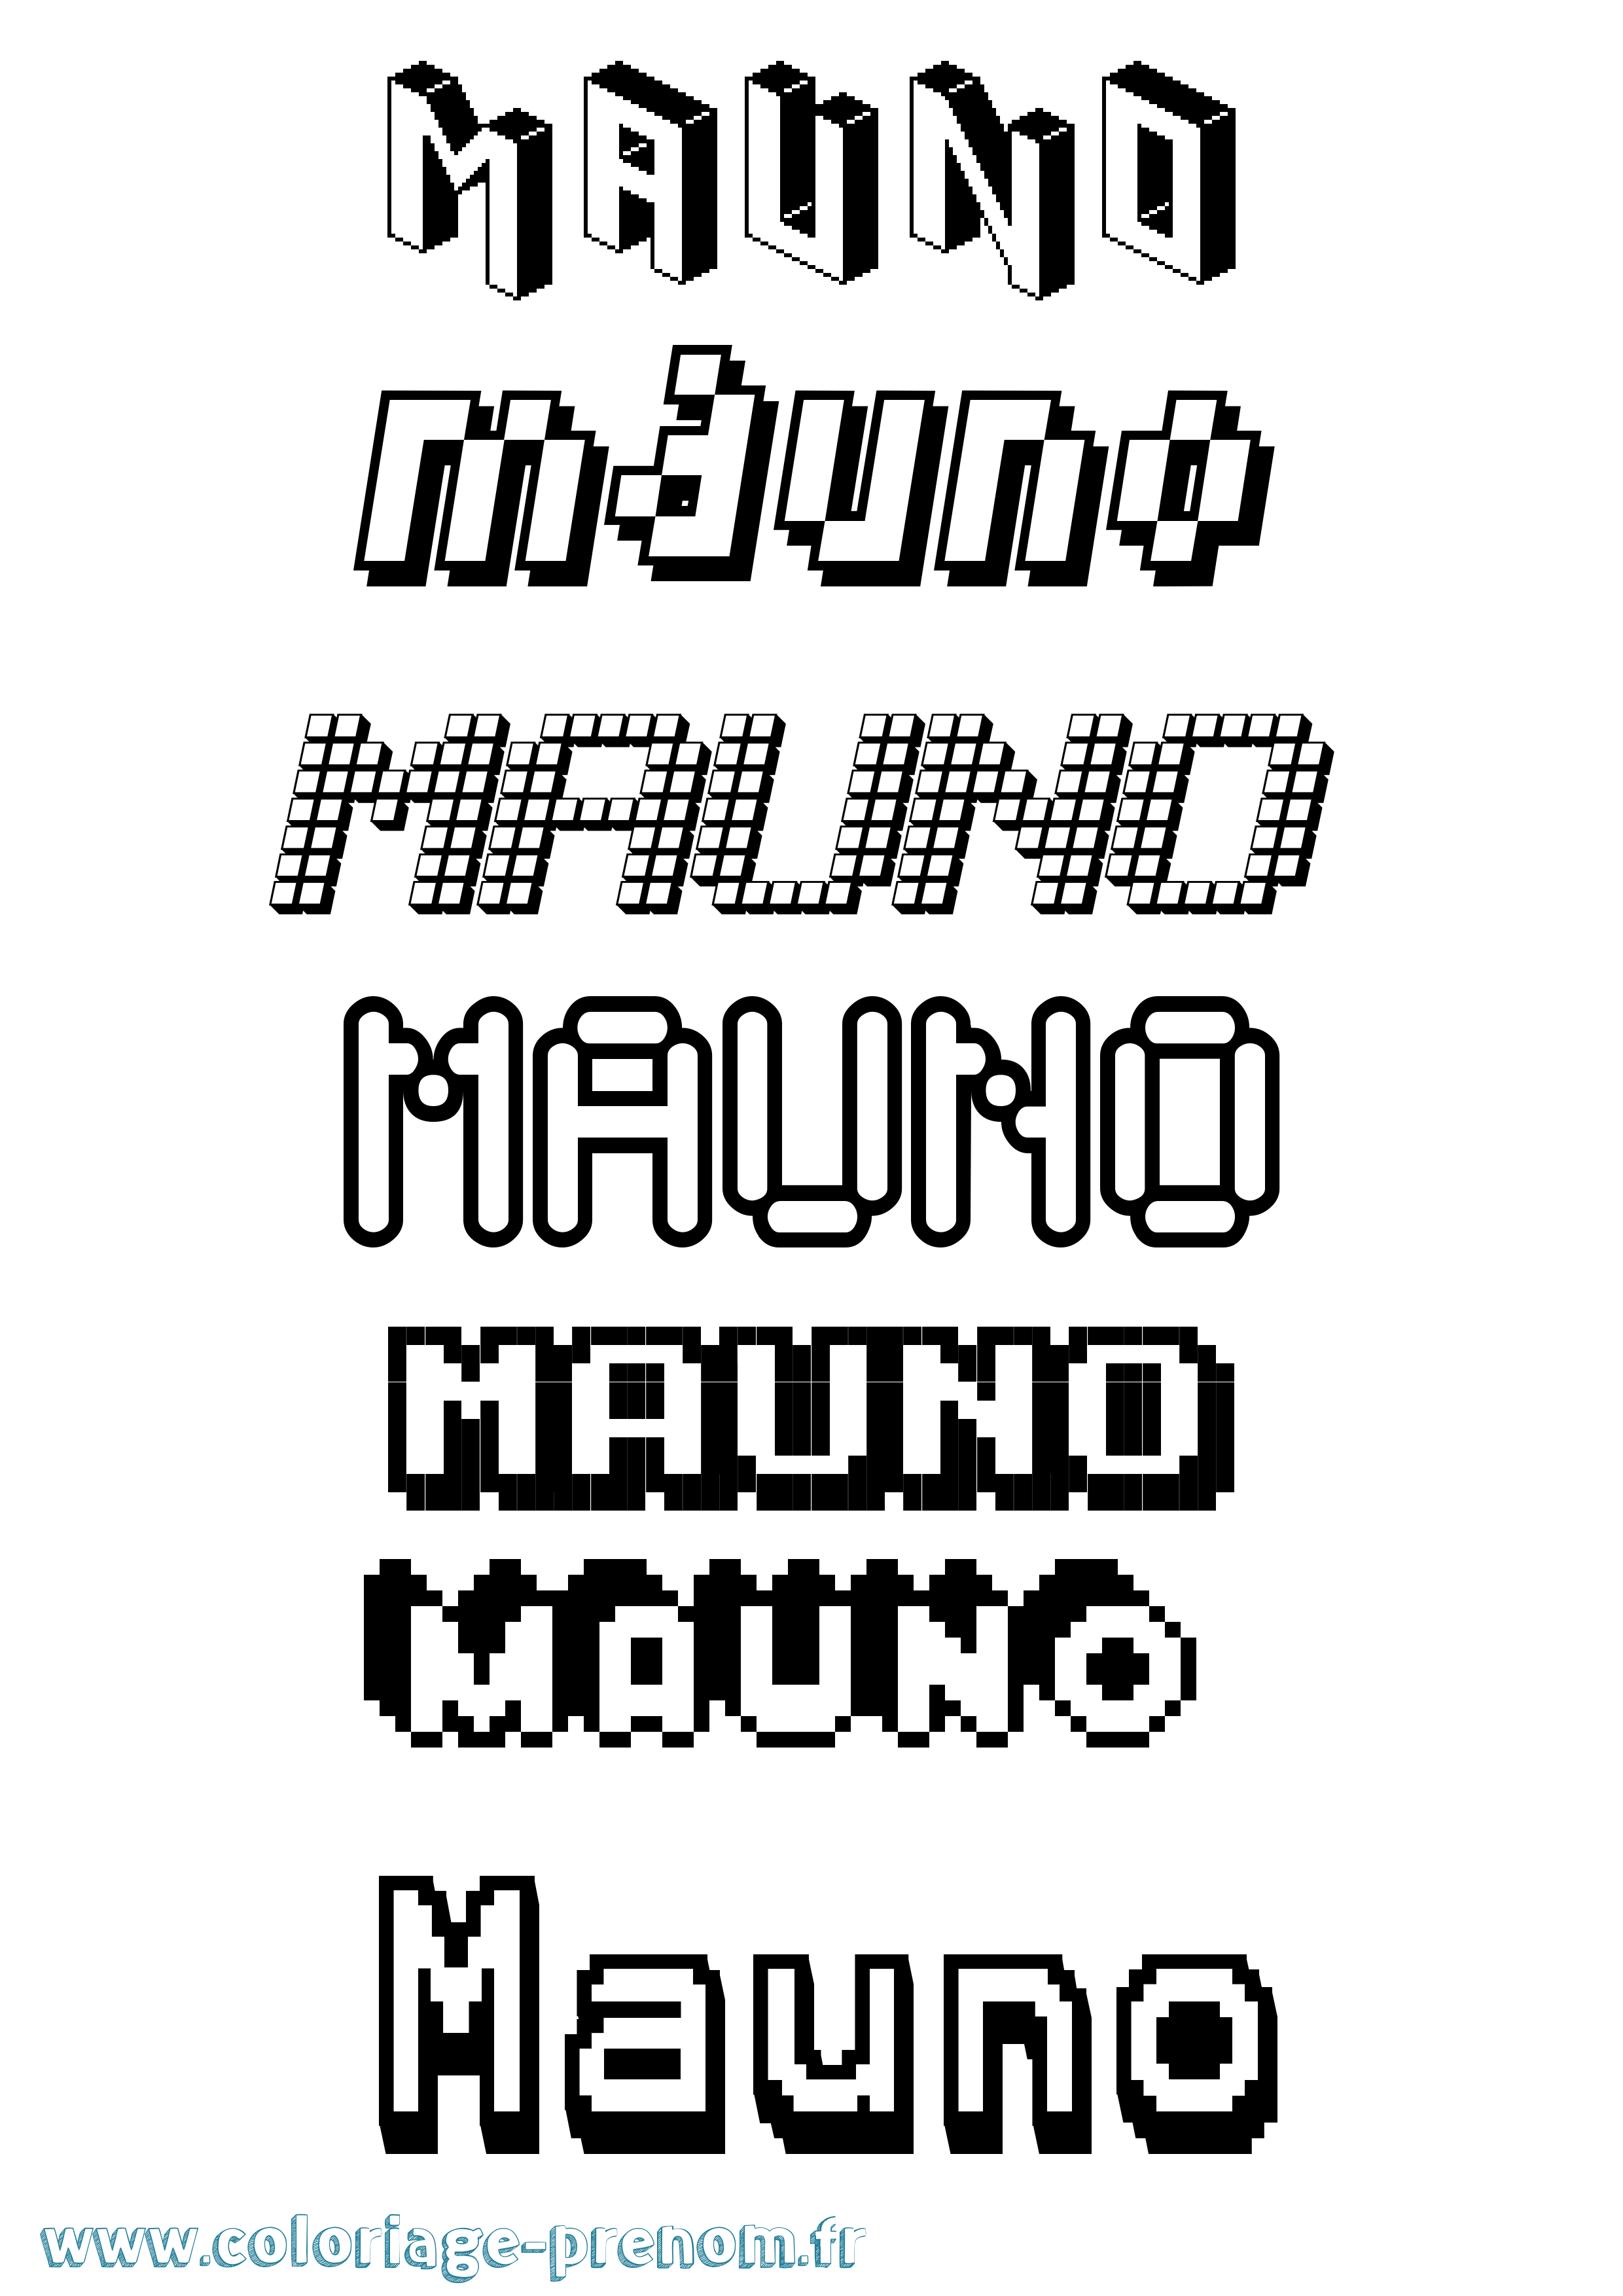 Coloriage prénom Mauno Pixel